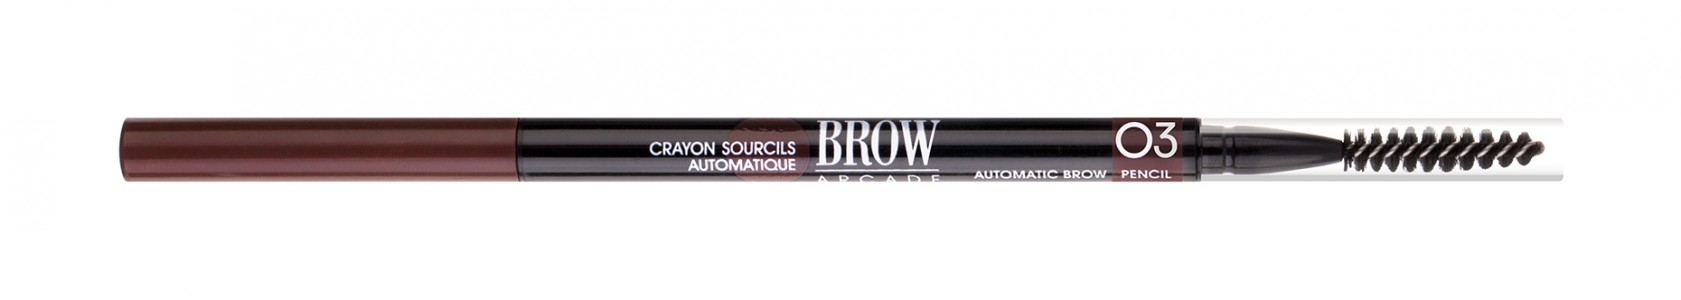 Карандаш для бровей Vivienne Sabo Brow Arcade Automatic Eyebrow Pencil 03 (Цвет 03 Темно-коричневый variant_hex_name 402013) (6680)